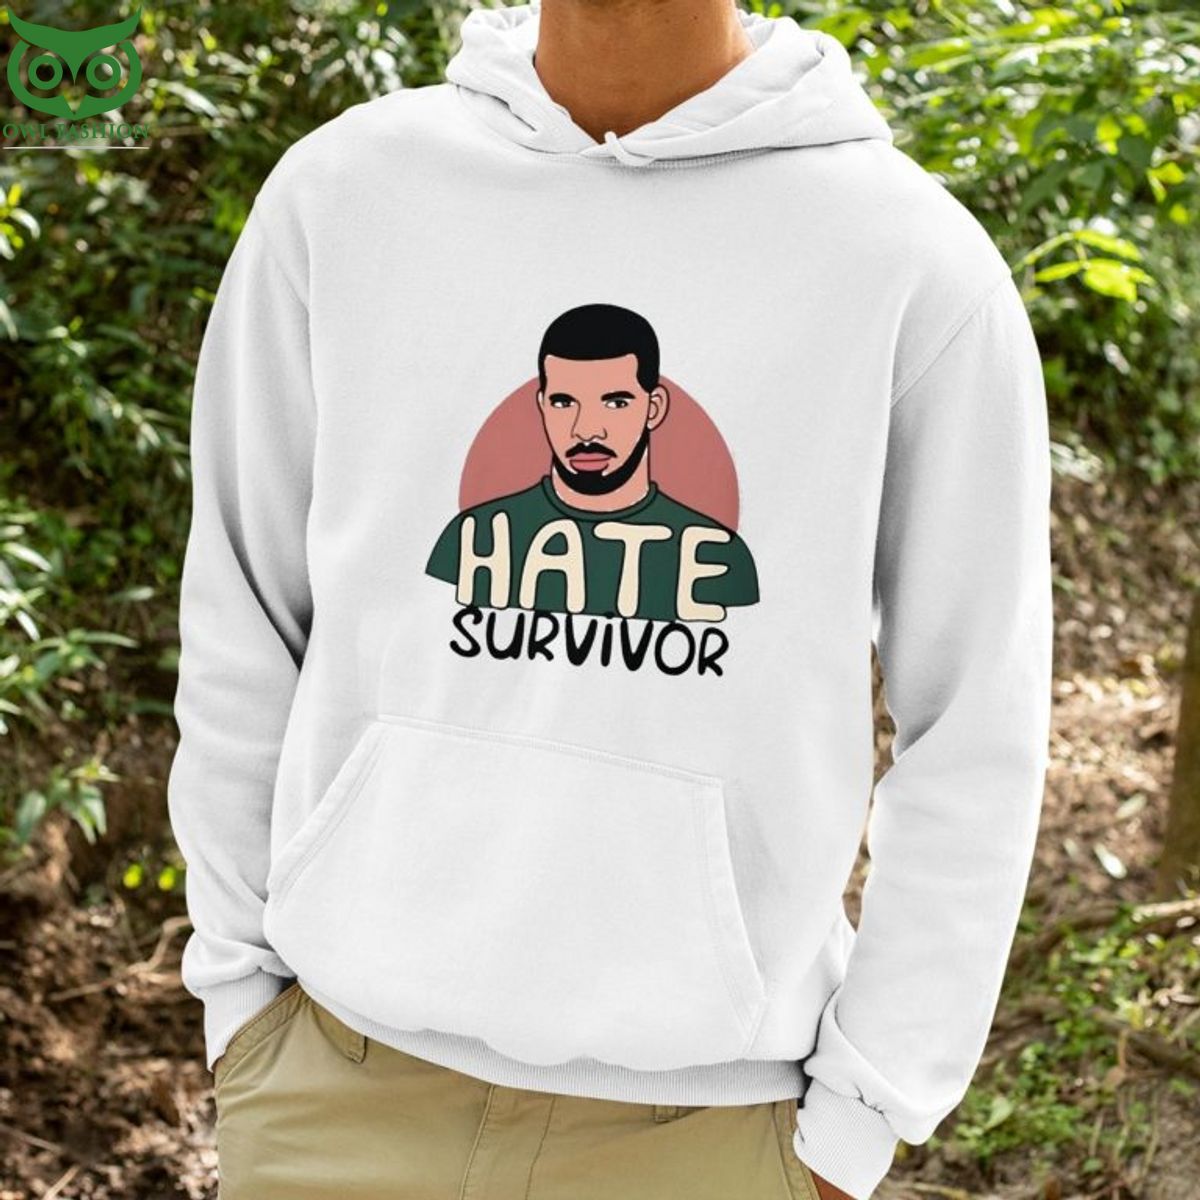 Drake Hate Survivor Hoodie Shirt Trending Cutting dash